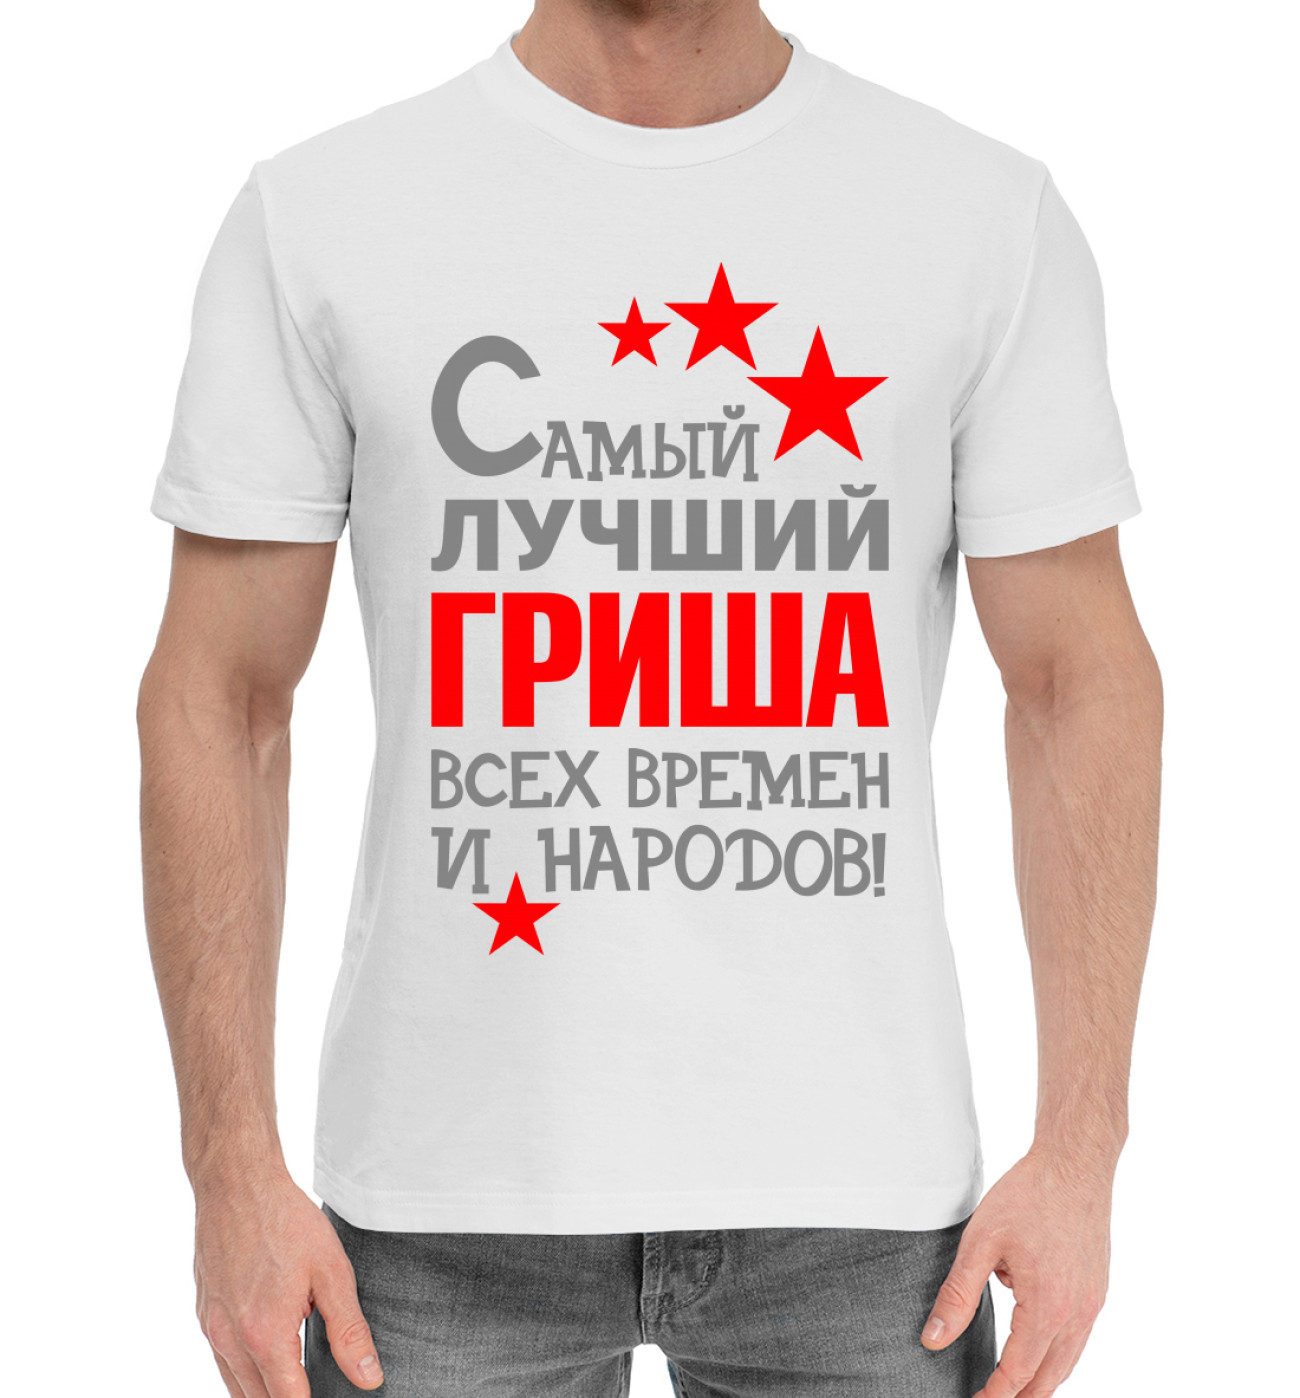 Мужская Хлопковая футболка Гриша, артикул: IMR-737490-hfu-2